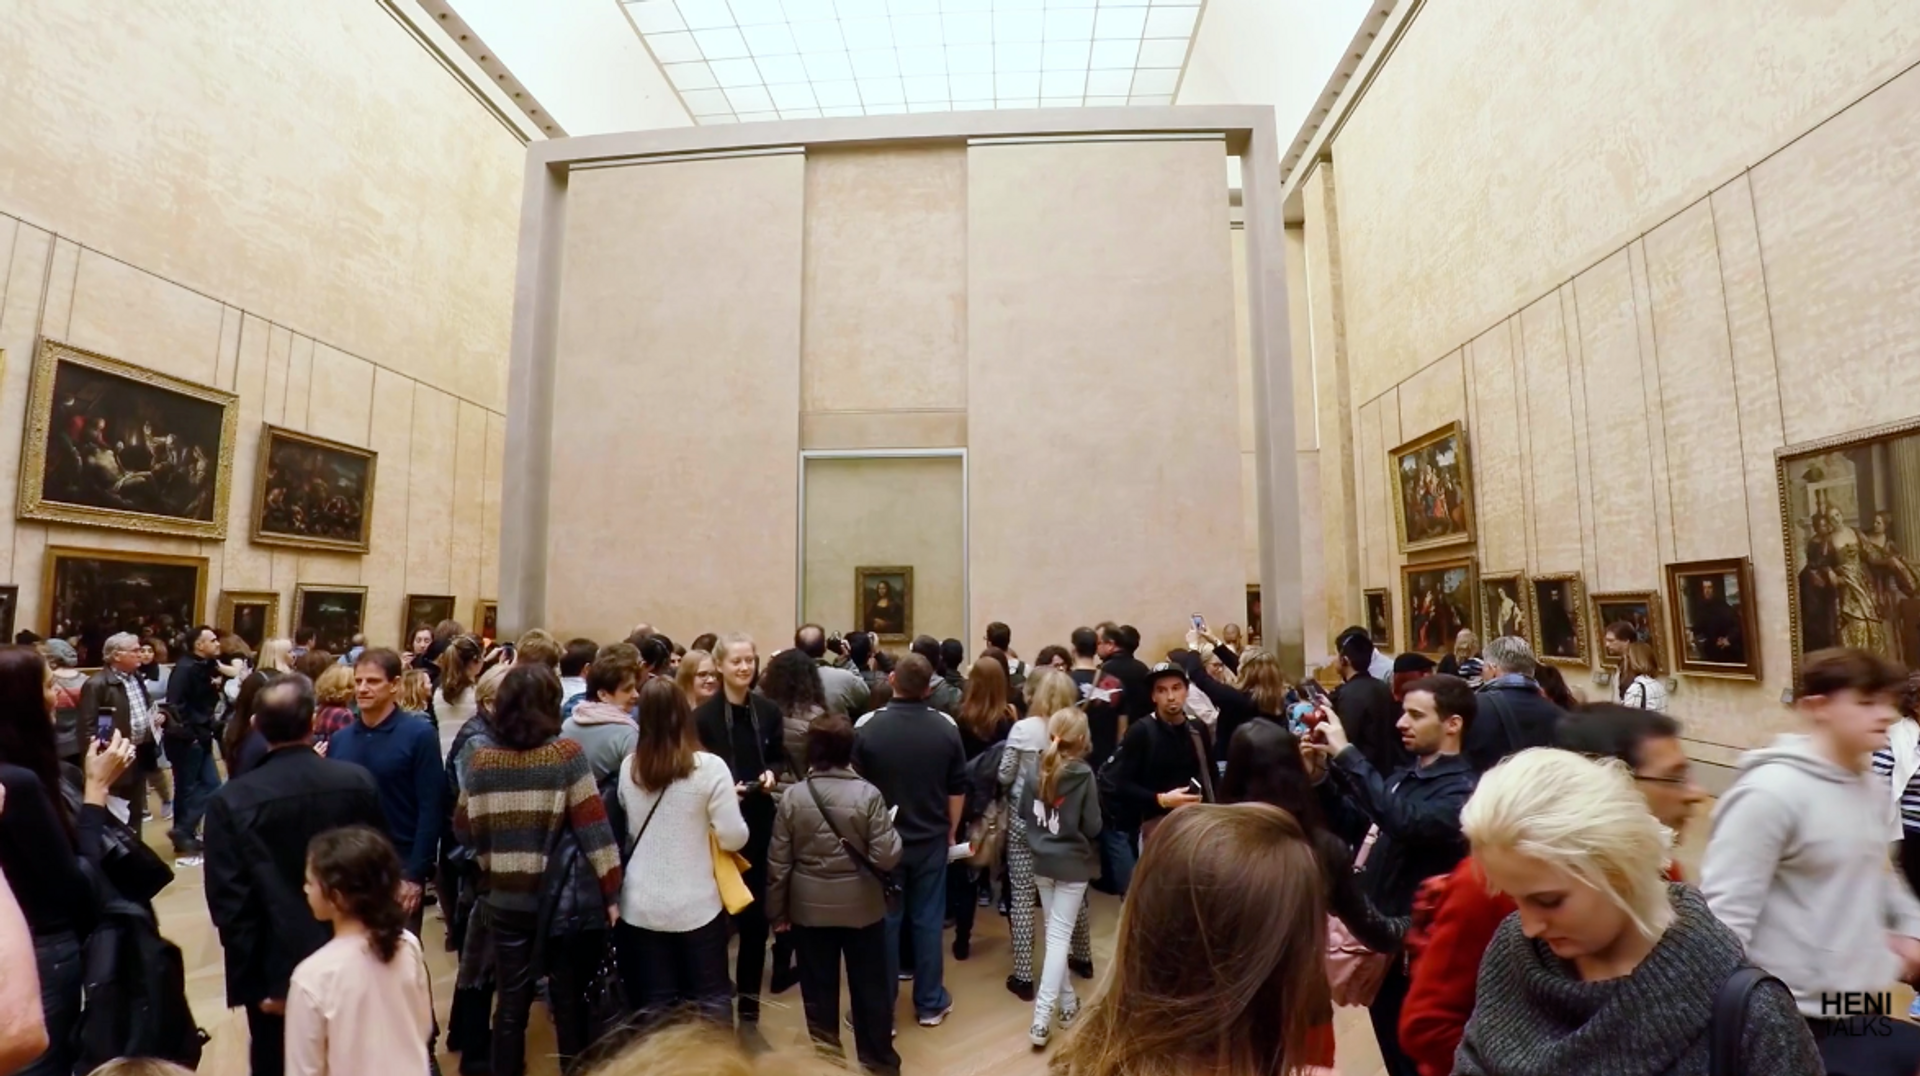 Still from the Heni Talks video The Mona Lisa: Painting beyond Portraiture with Martin Kemp Heni Talks